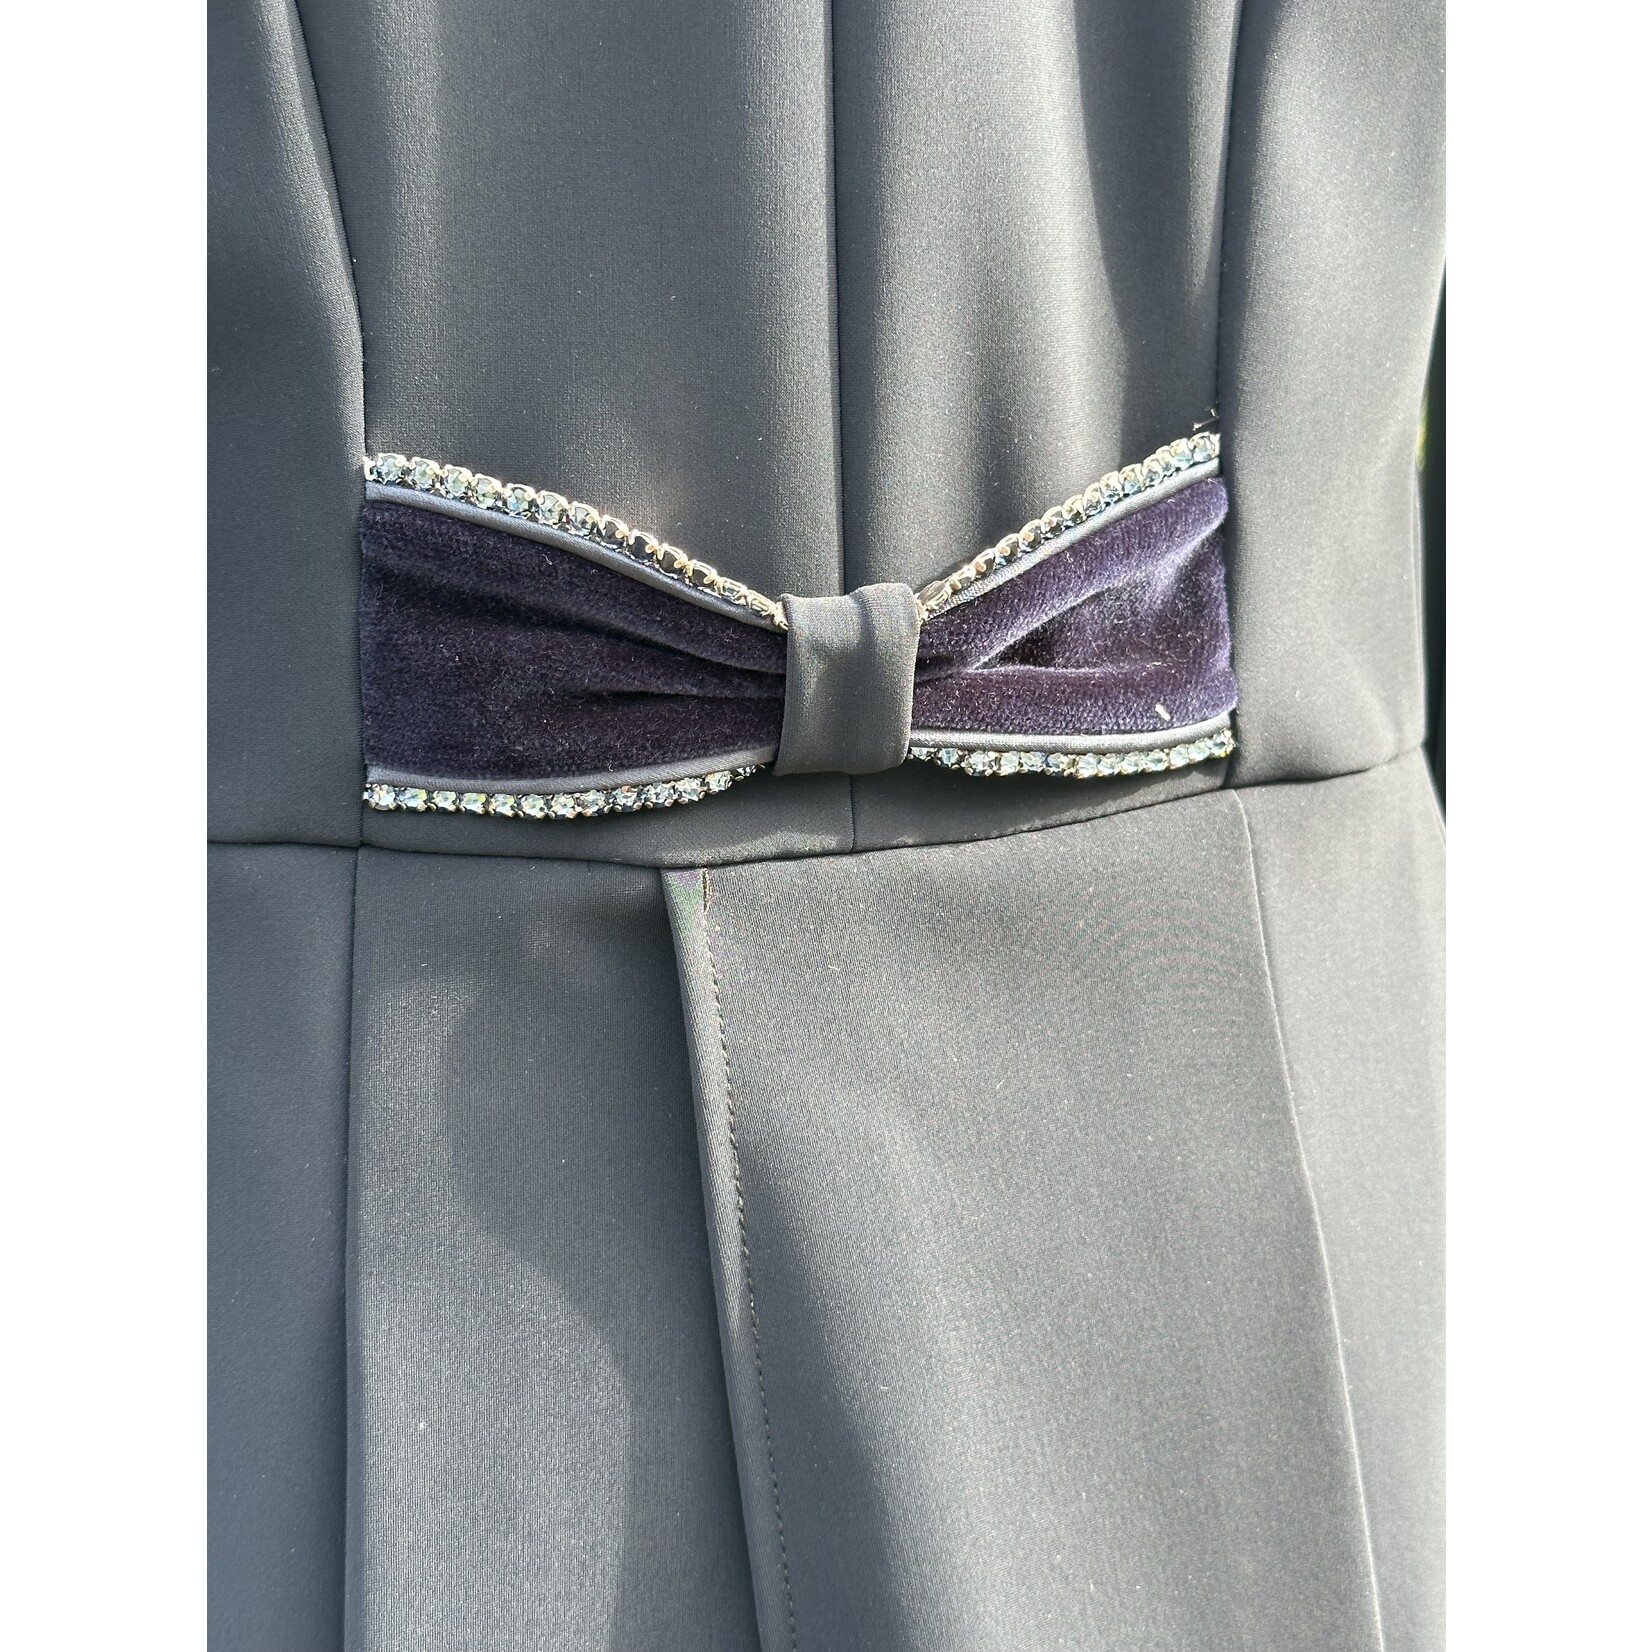 Lamantia Couture Nederland DEMO Lamantia Couture slipjas donker blauw diamond collectie